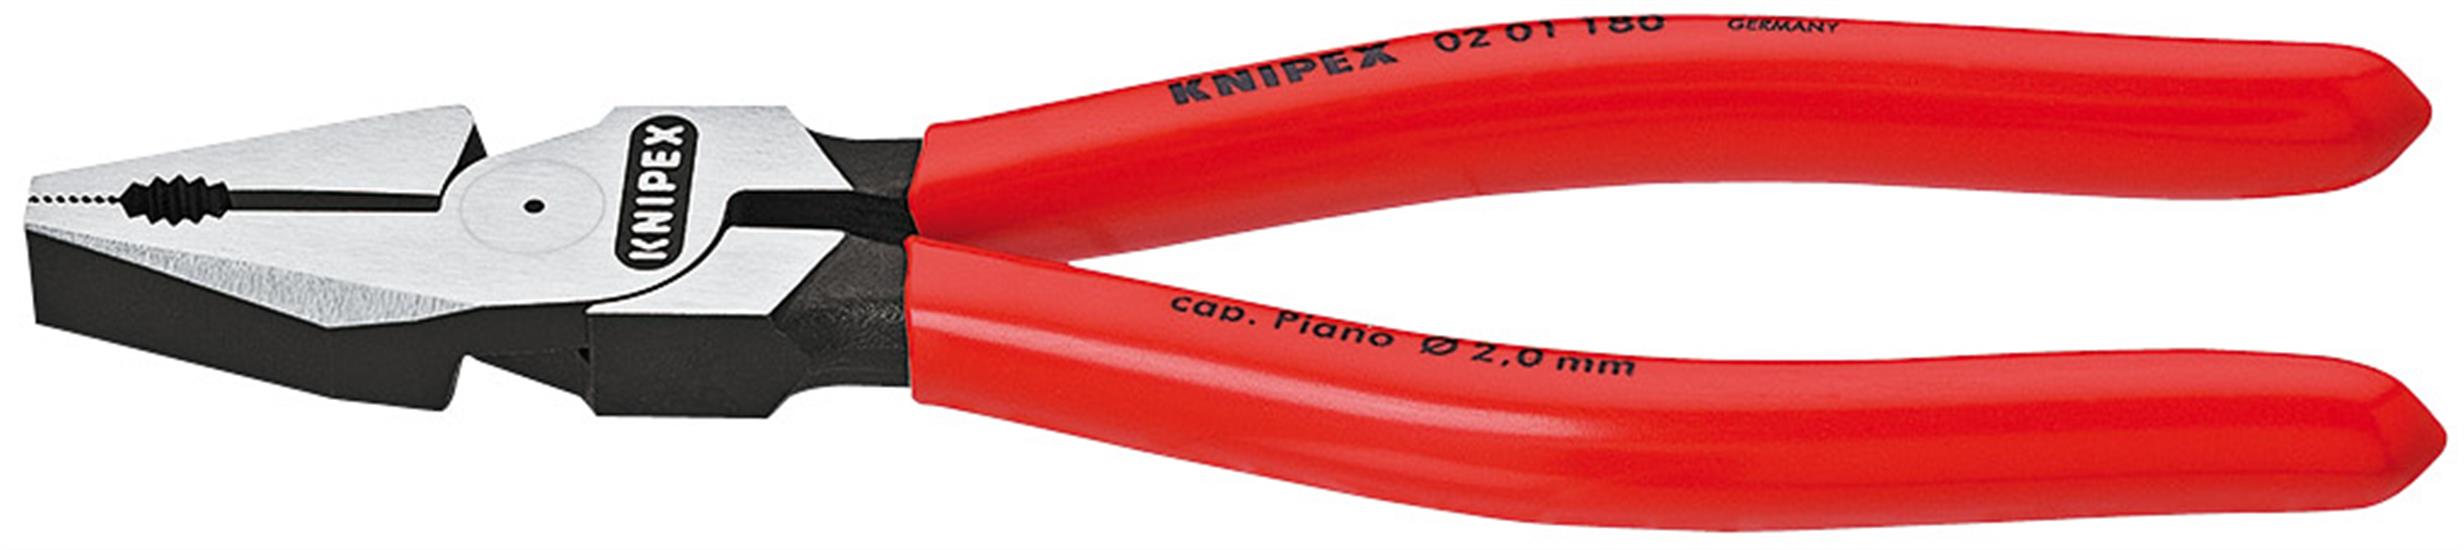 Draper 19587 ⠂ 01 180 SB) - Knipex 02 01 180 SB High Leverage Combination Pliers, 180mm